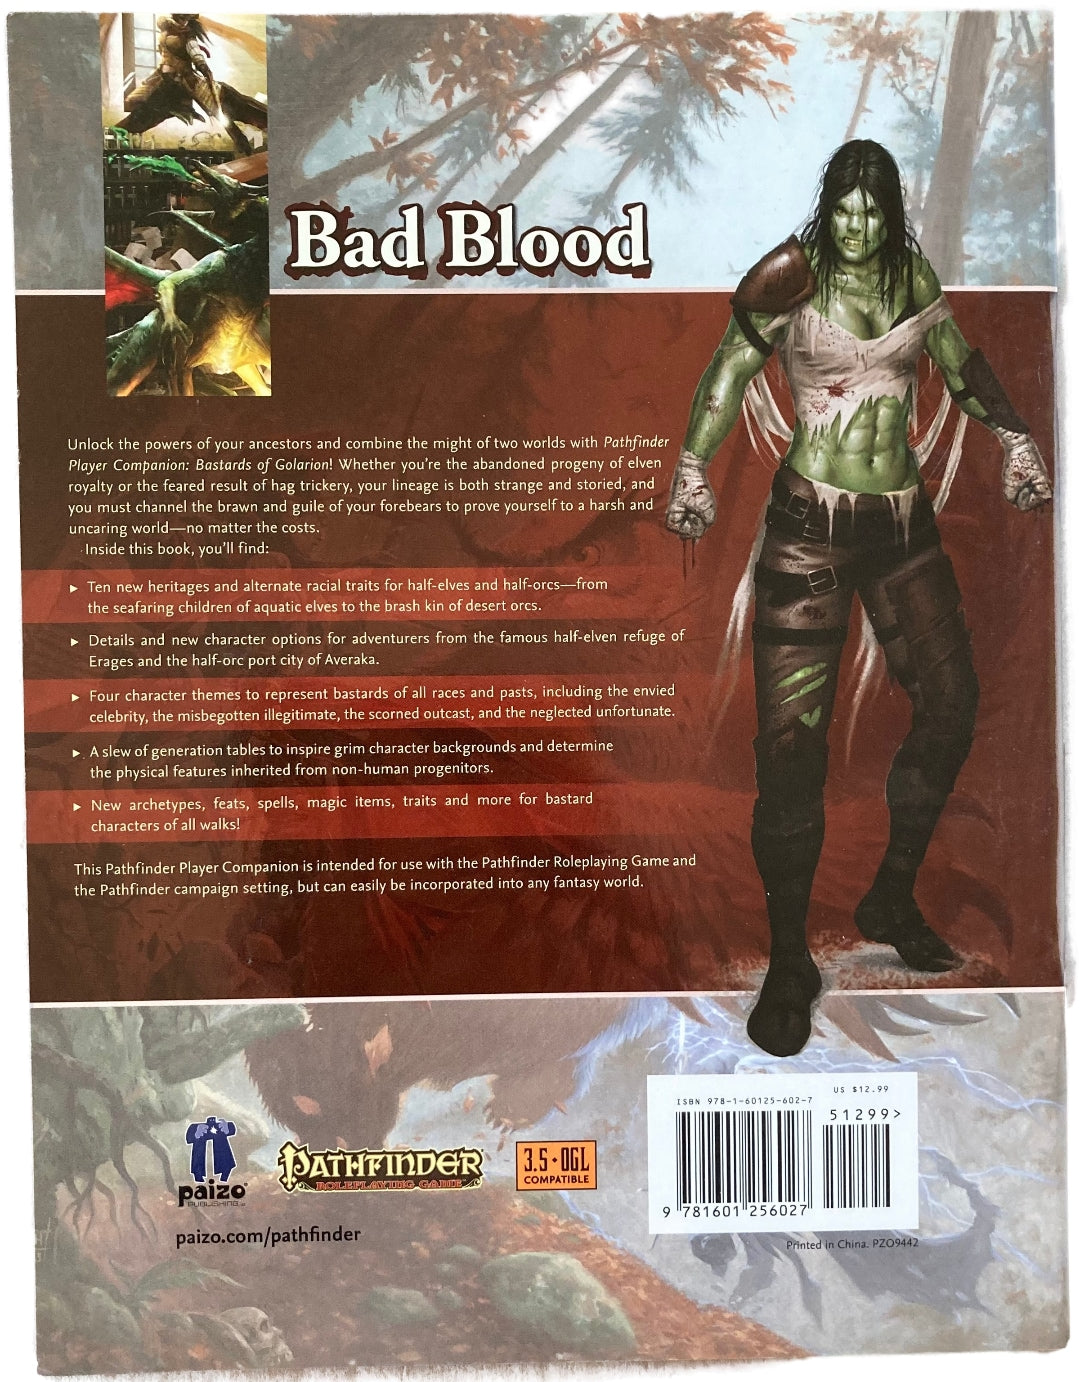 Paizo - Pathfinder RPG - Player Companion: Bastards of Golarion (2014)